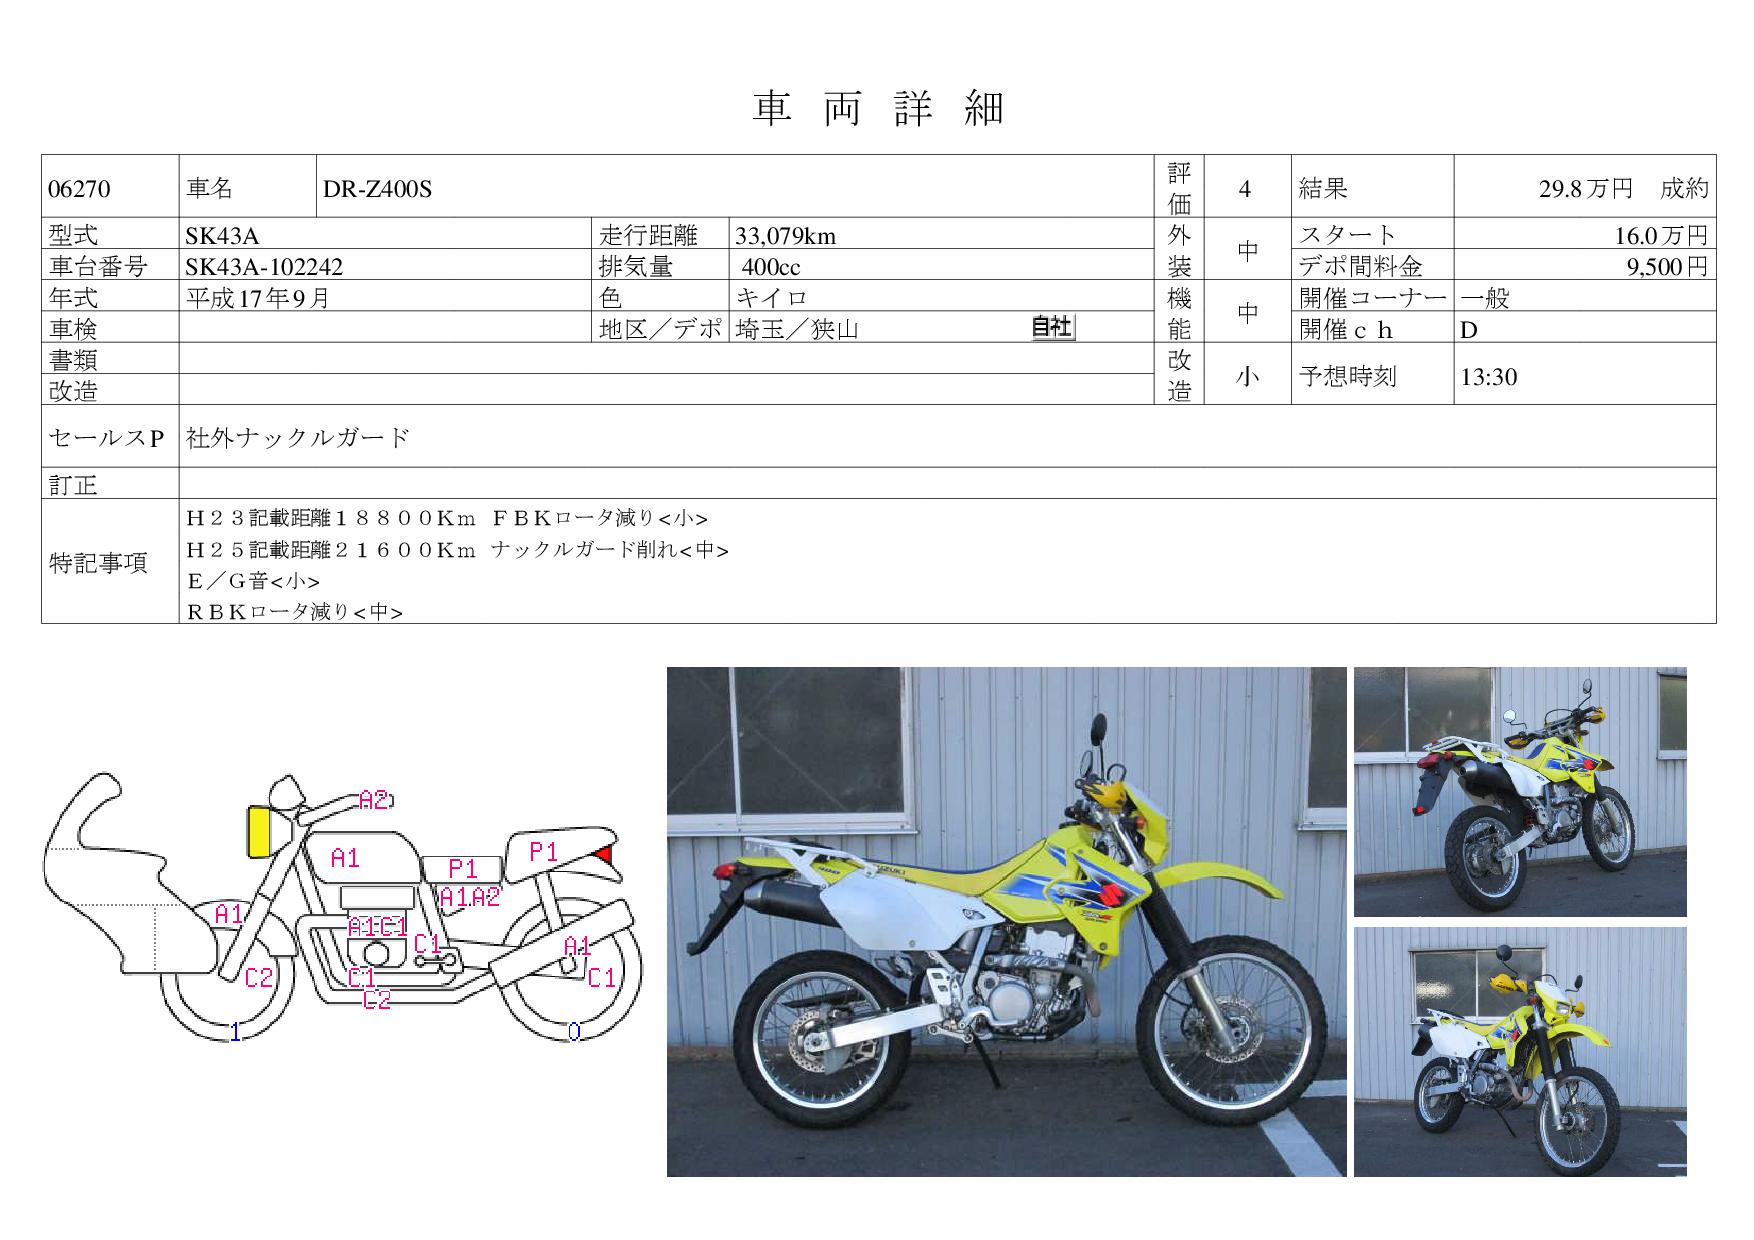 Мануалы и документация для Suzuki DR-Z 400 (S, SM, E)